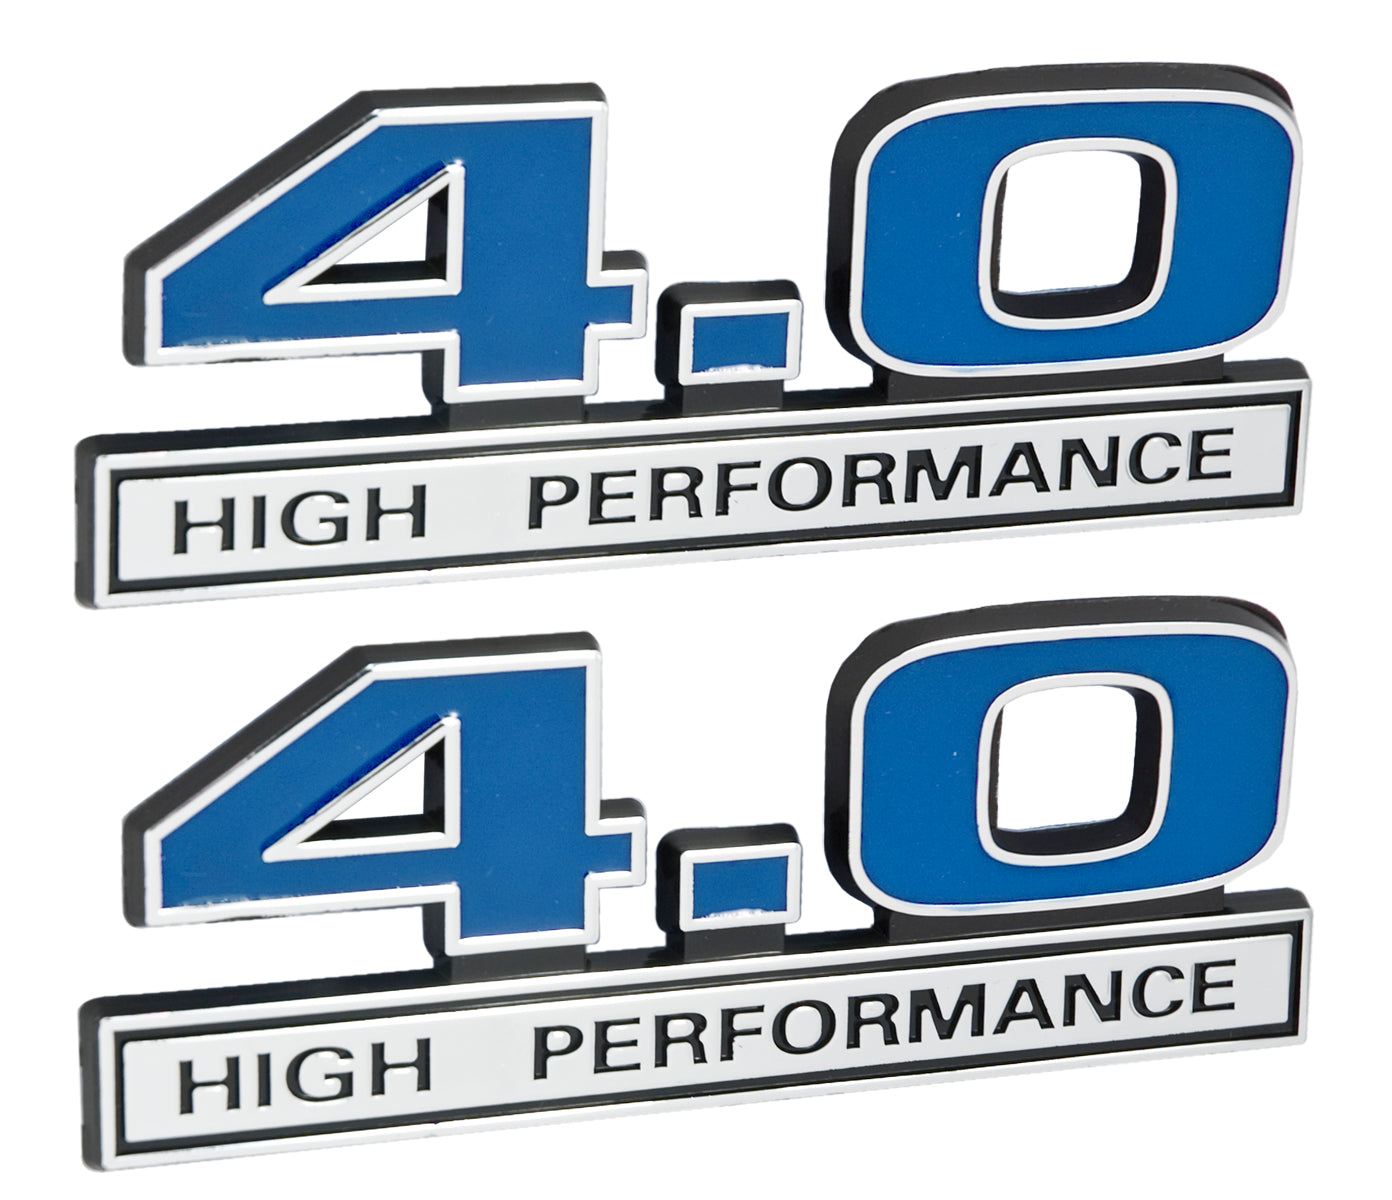 4.0 Liter High Performance Engine Emblems Badge in Chrome & Blue - 5" Long Pair